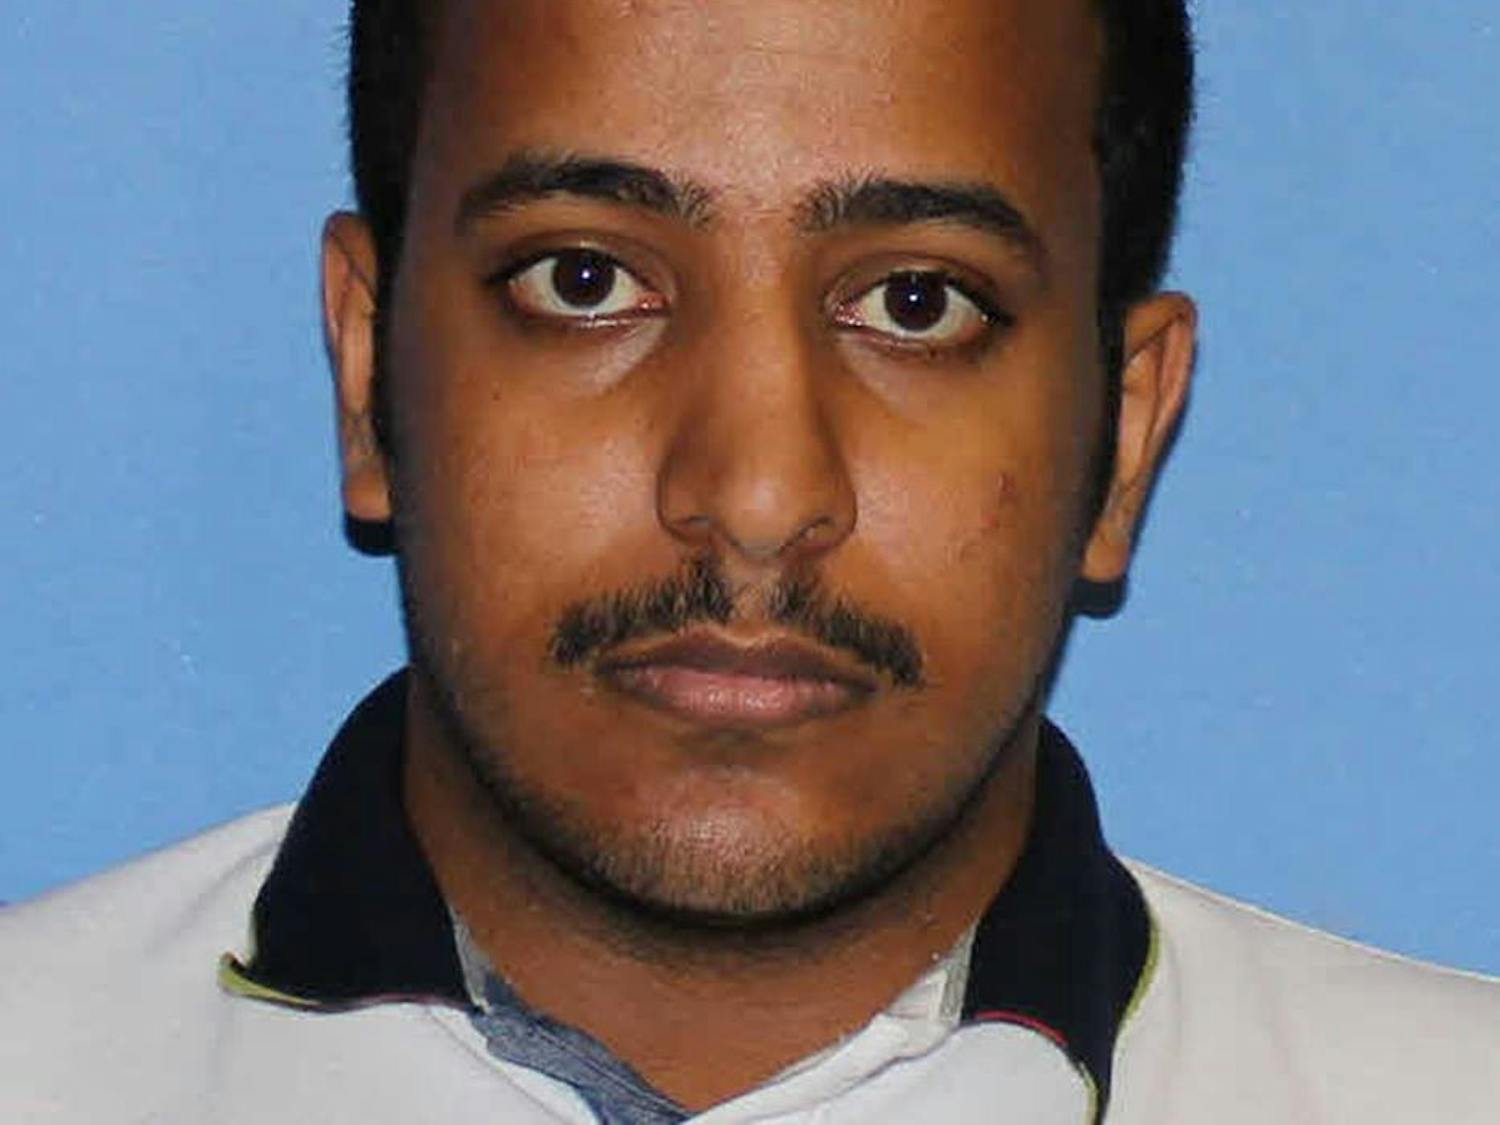 UW-Stout junior Hussain Saeed Alnahdi was beaten in downtown Menomonie Sunday, and was pronounced dead Monday.